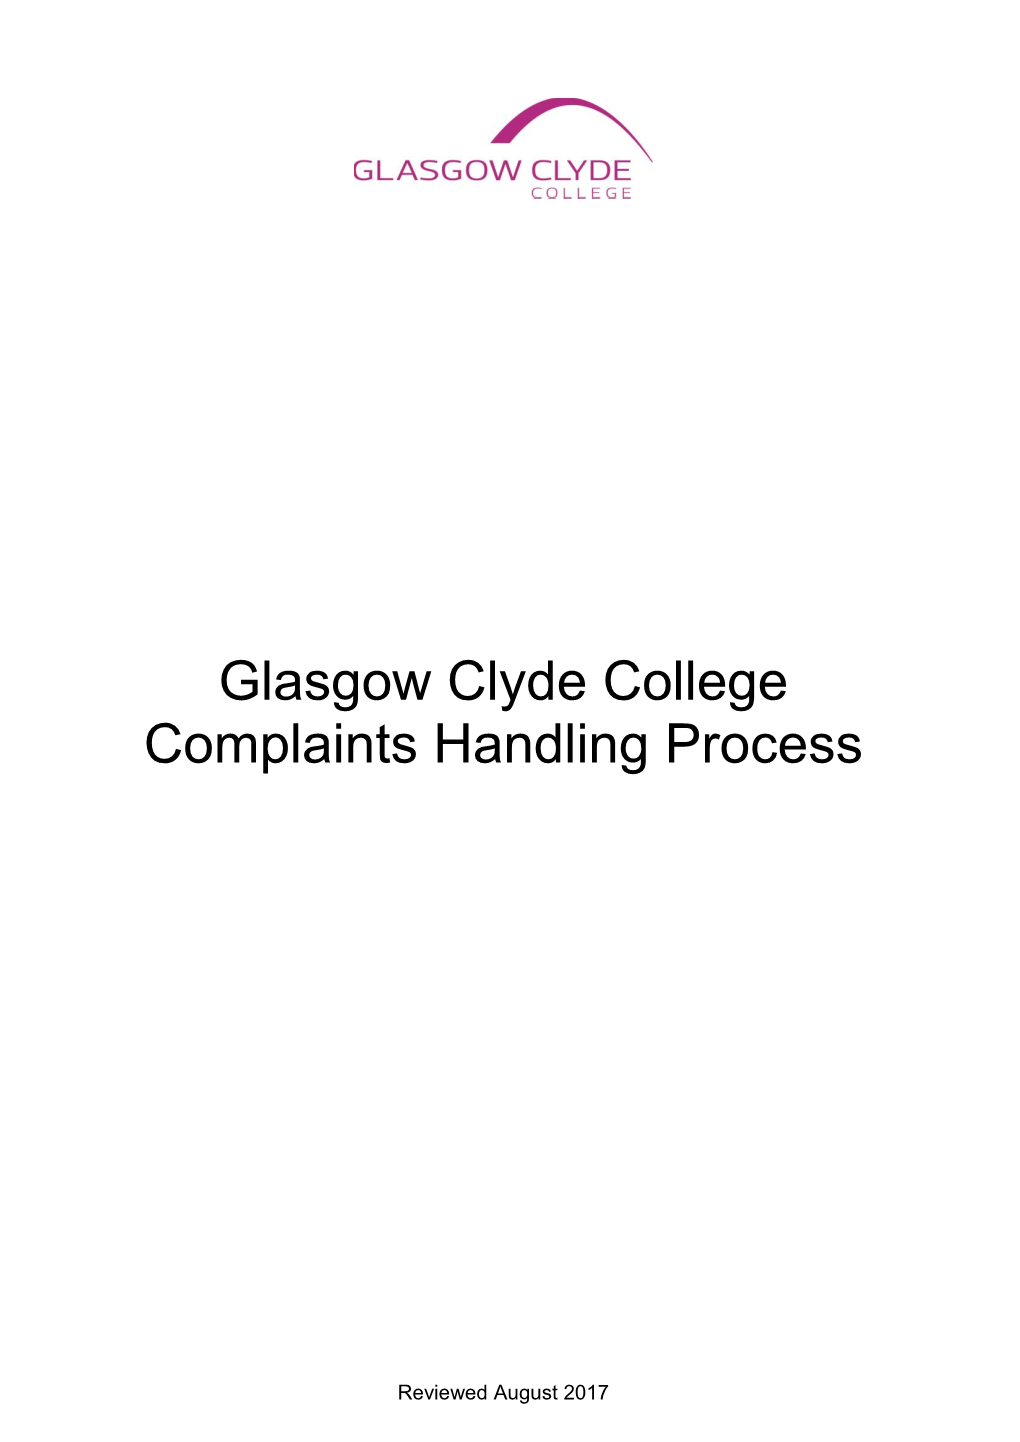 Glasgow Clyde College Complaints Handling Process